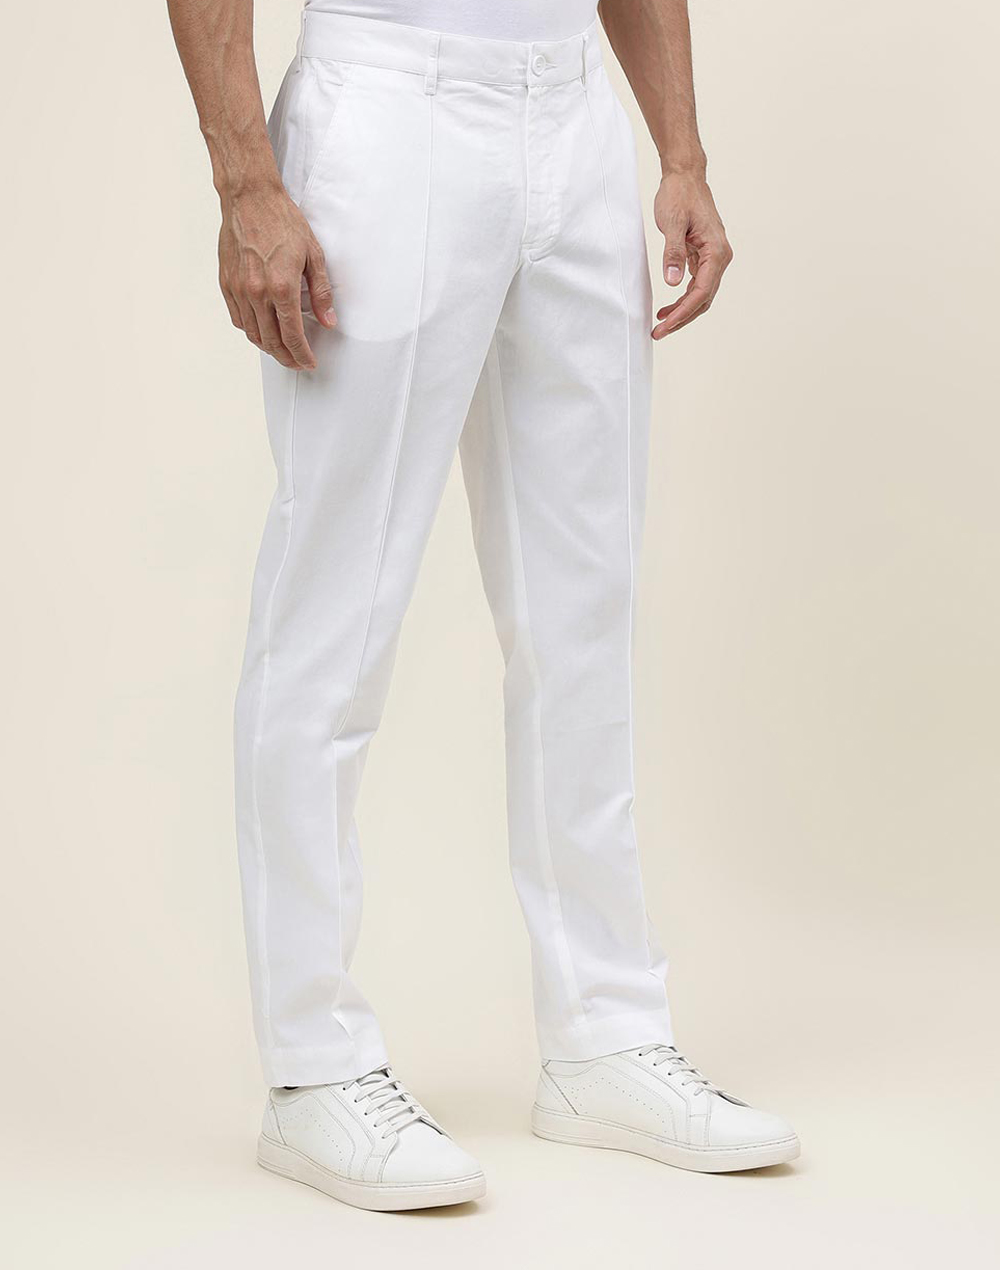 White Cotton Slim Fit Jama Pants